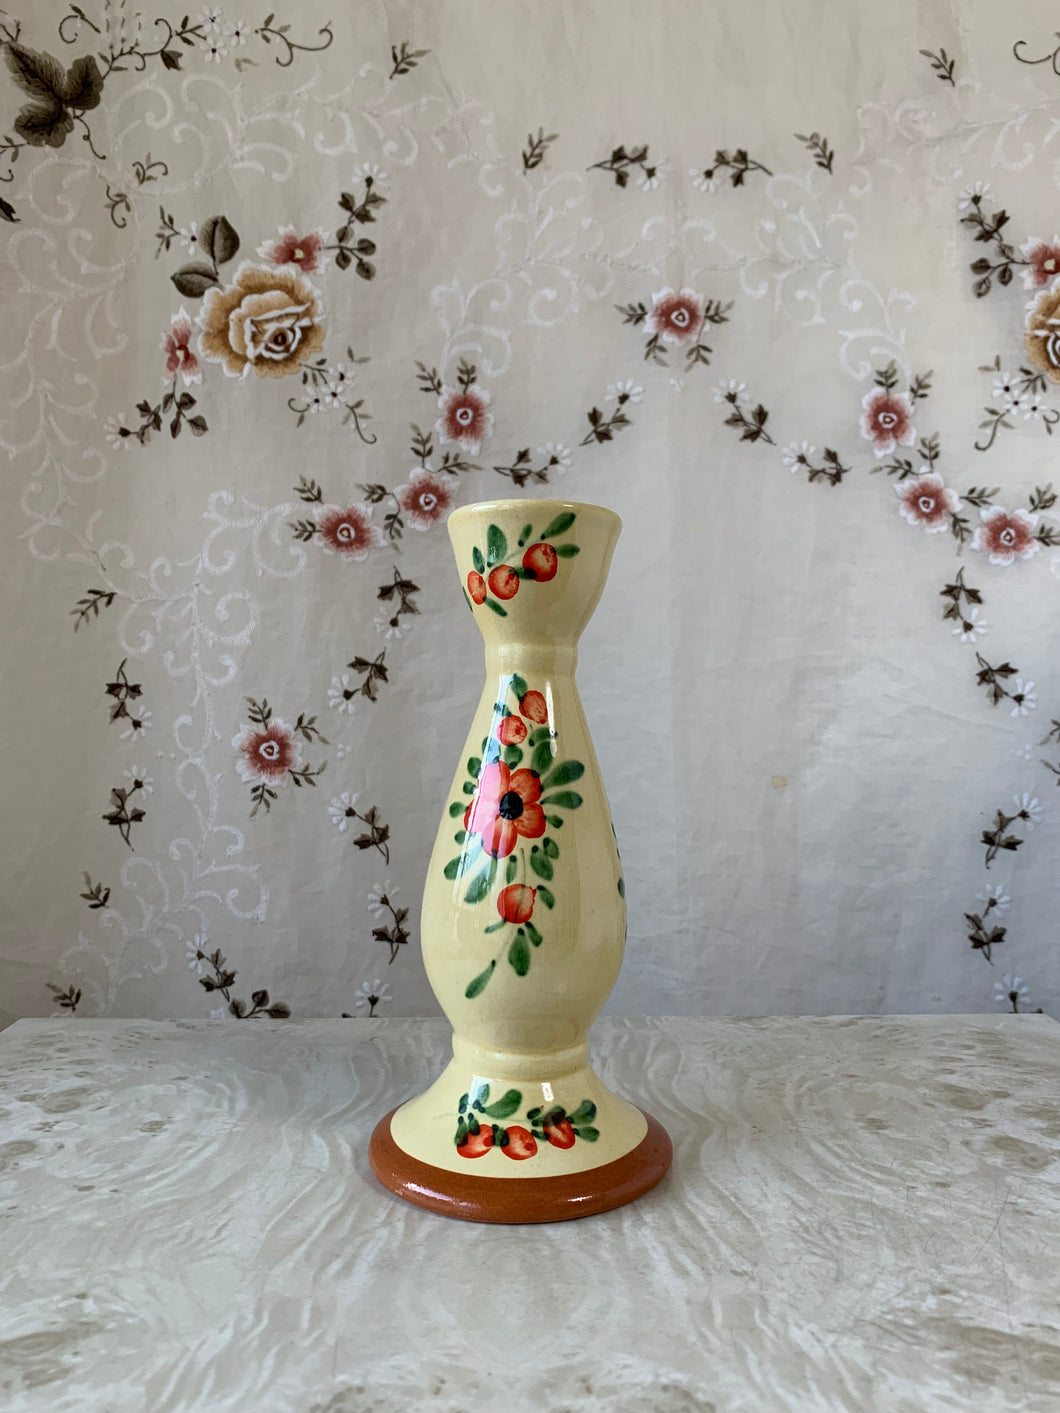 flower vase from Italy